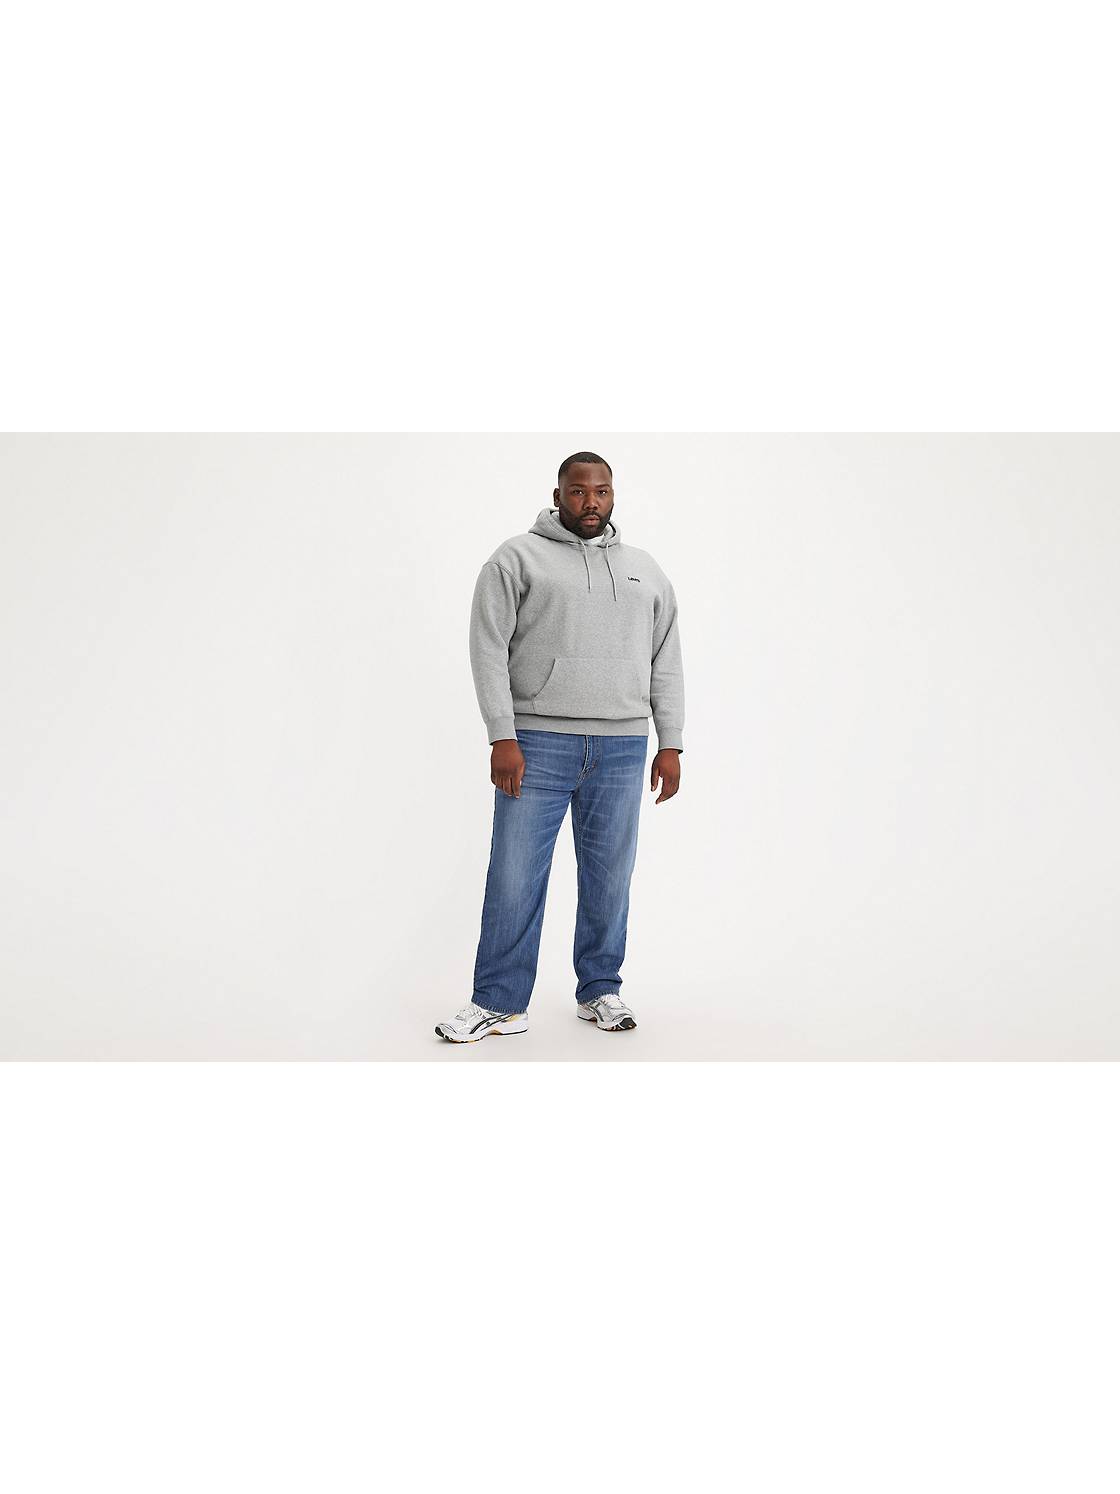 Big & Tall Jeans: Shop Men's Jeans & Pants Styles